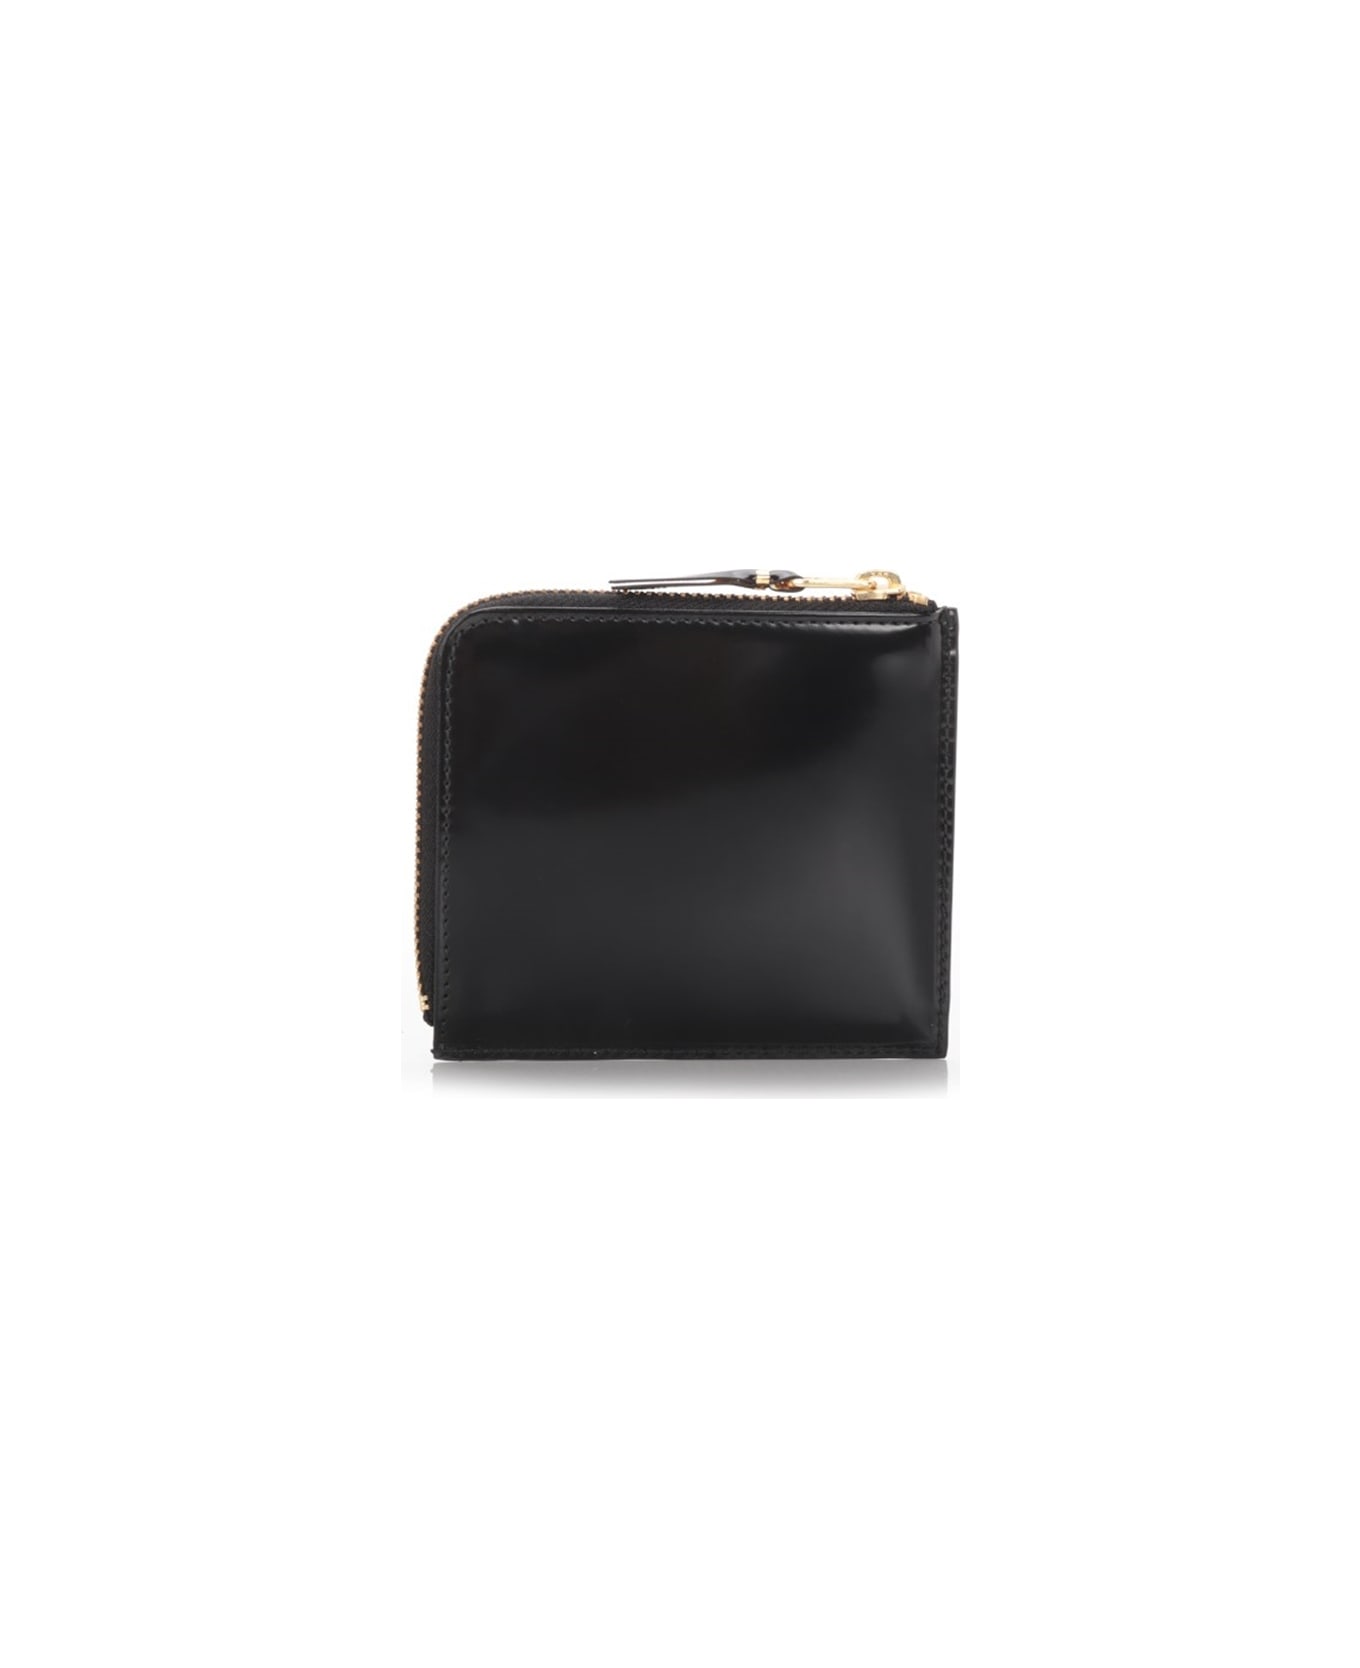 Comme des Garçons Wallet Black Wallet With Gold Colored Inside